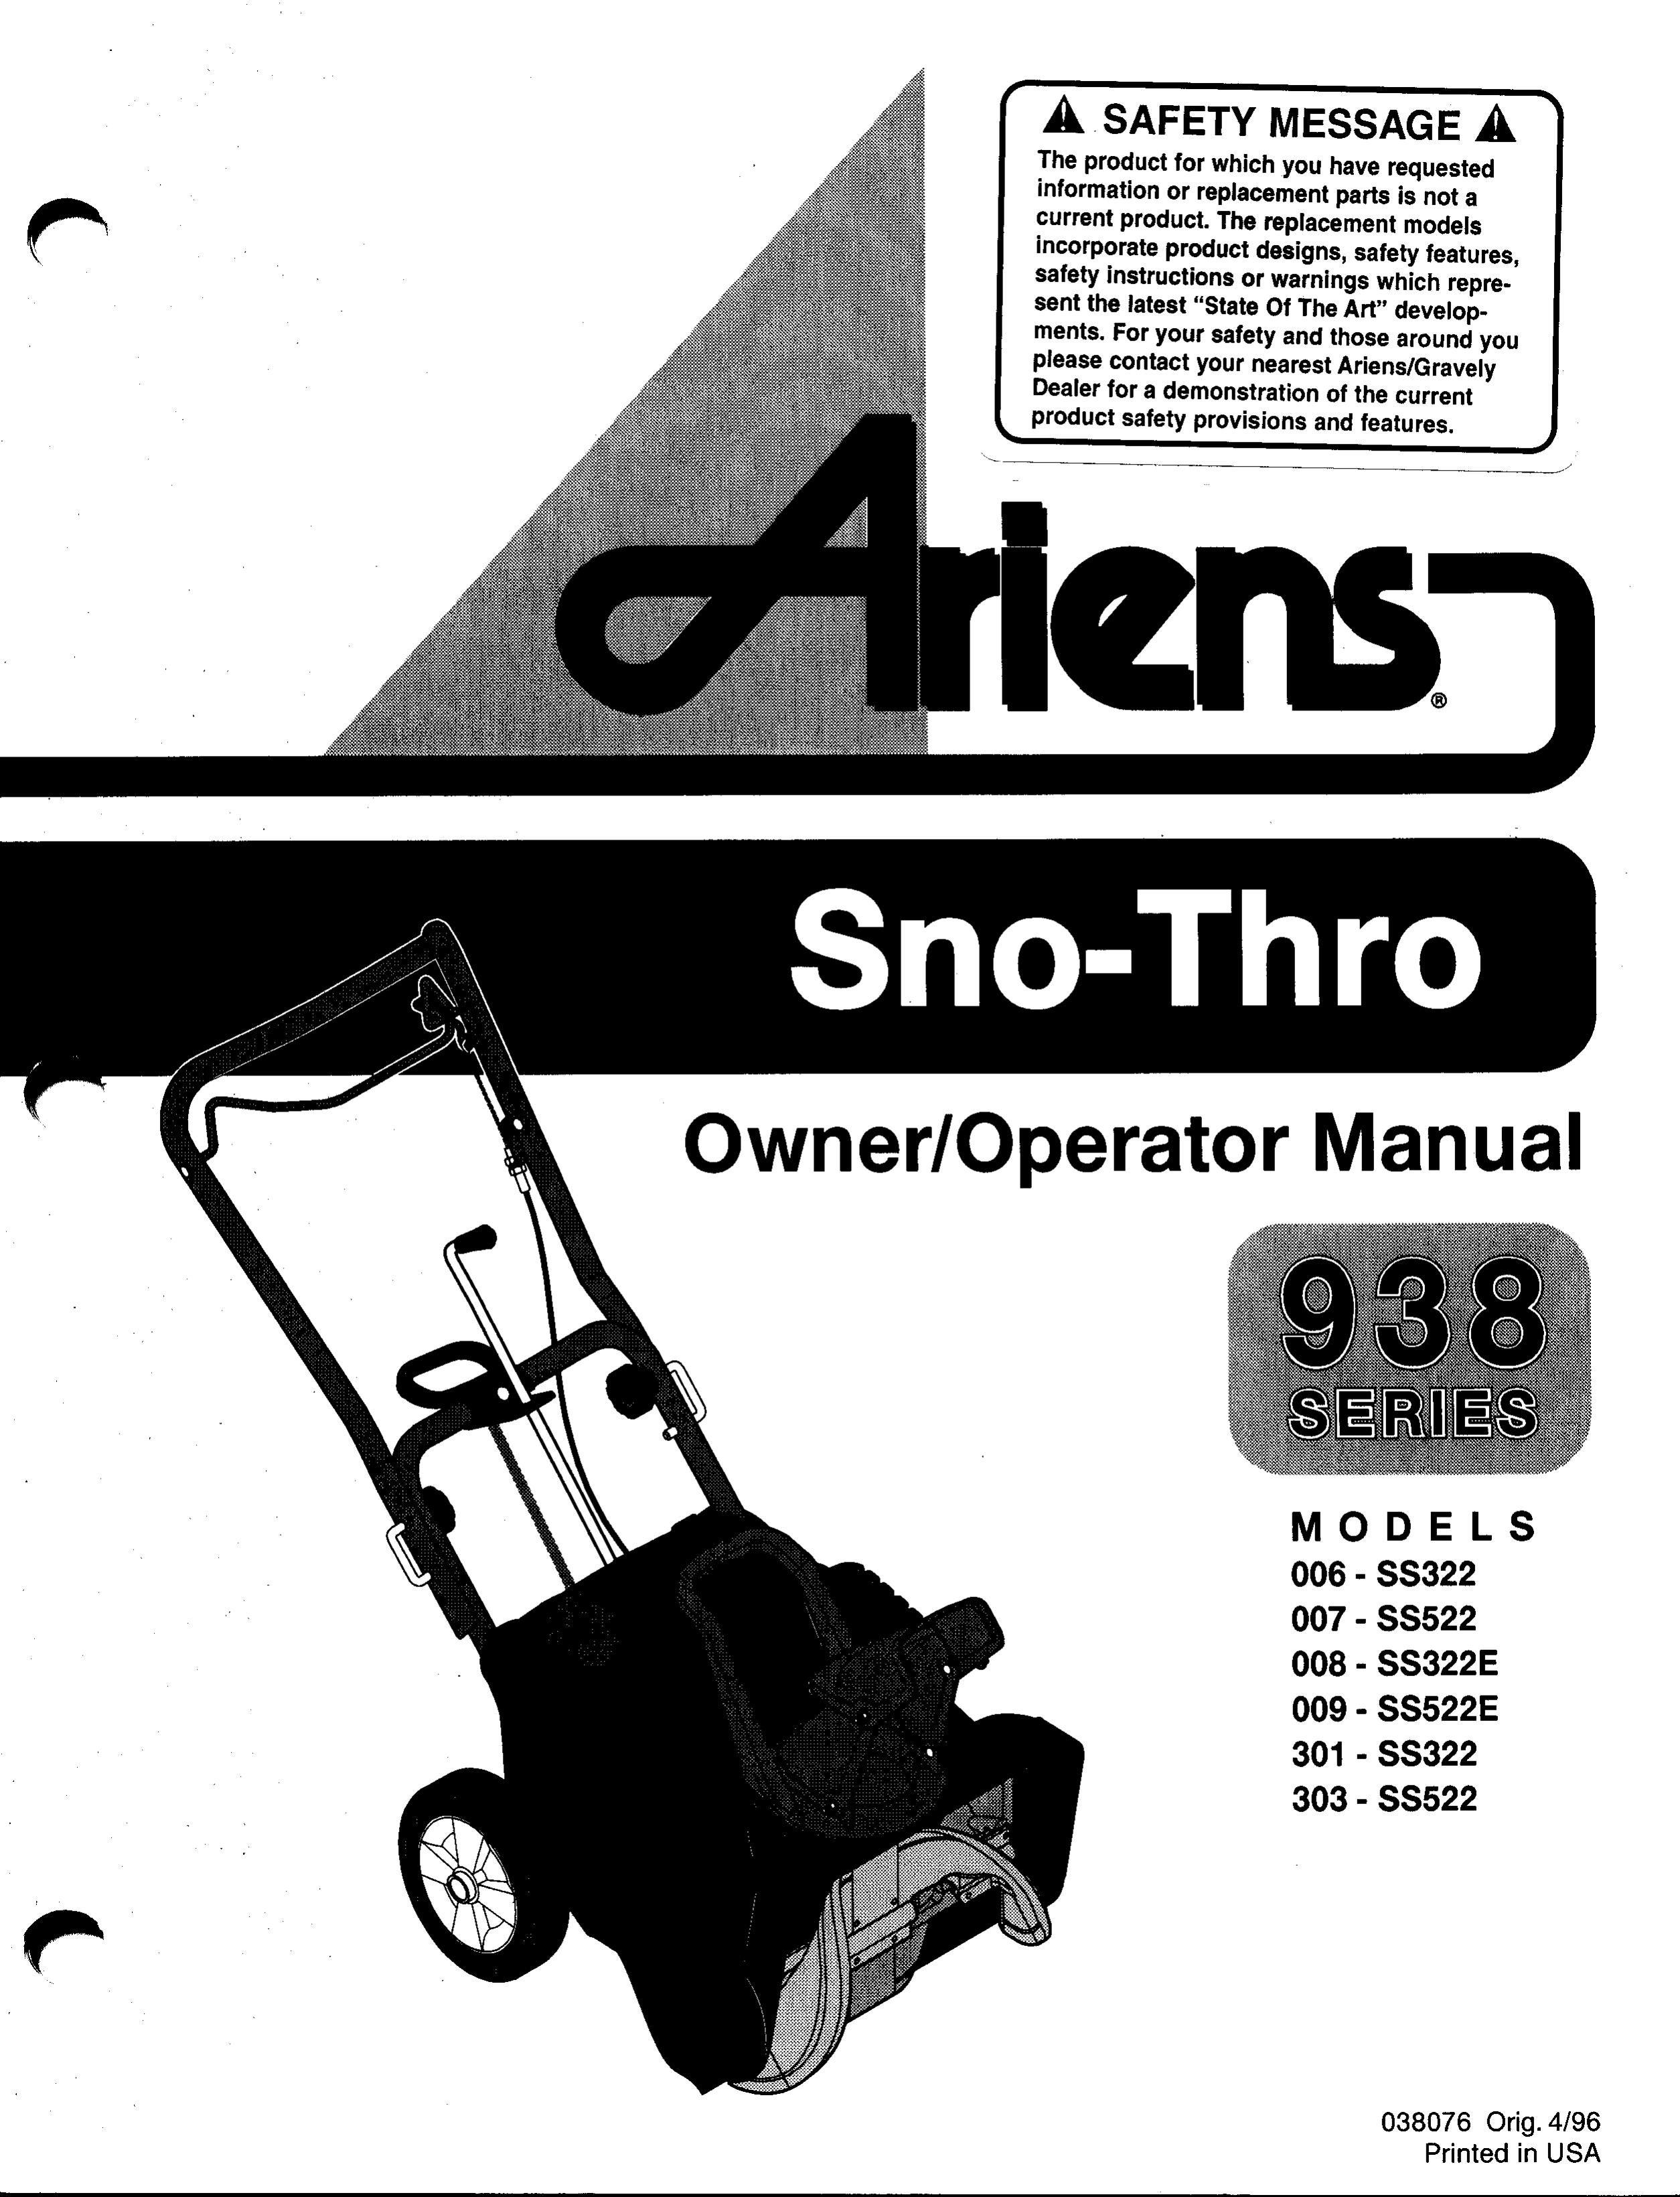 Ariens 009-SS522E Snow Blower User Manual